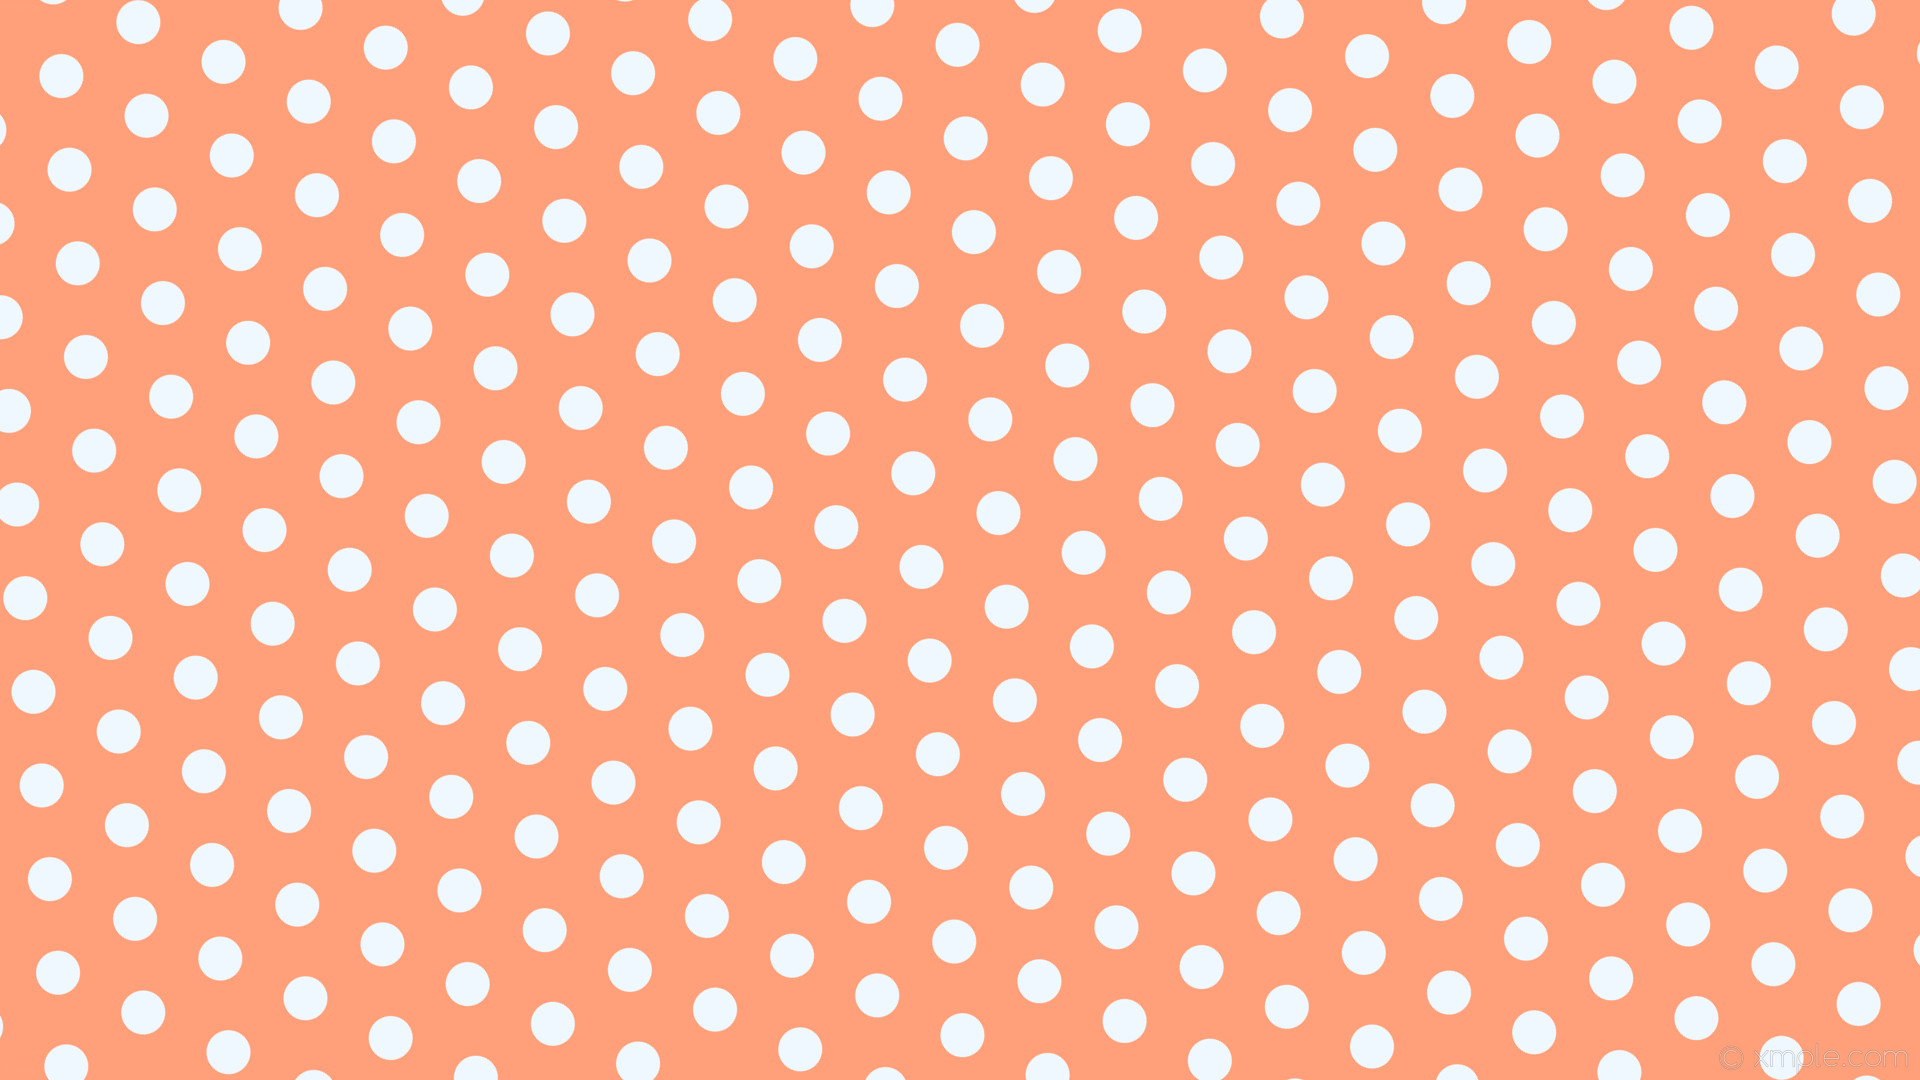 Wallpaper hexagon white polka dots red light salmon alice blue #ffa07a #f0f8ff diagonal 35